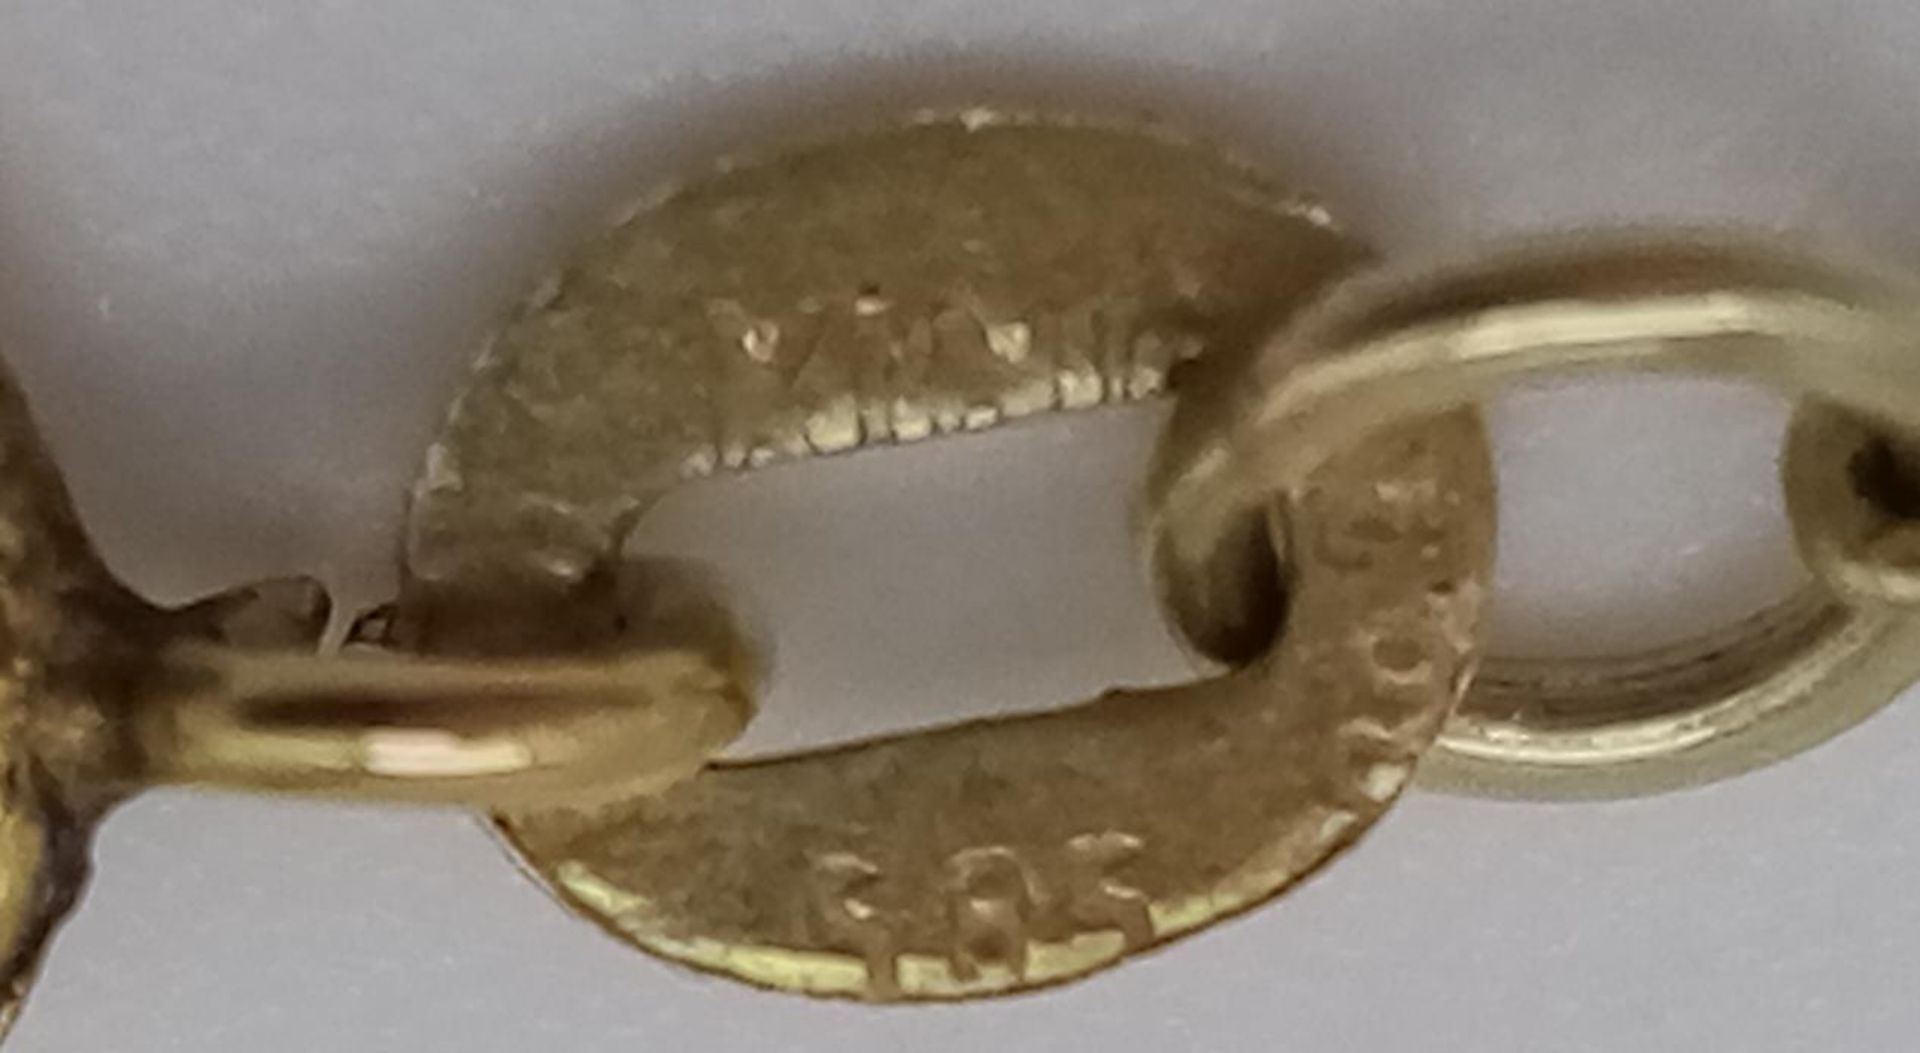 A PRETTY 14K YELLOW GOLD DIAMOND, SAPPHIRE, RUBY & EMERALD PENDANT ON FIGARO CHAIN, WEIGHT 5.8G - Image 11 of 11